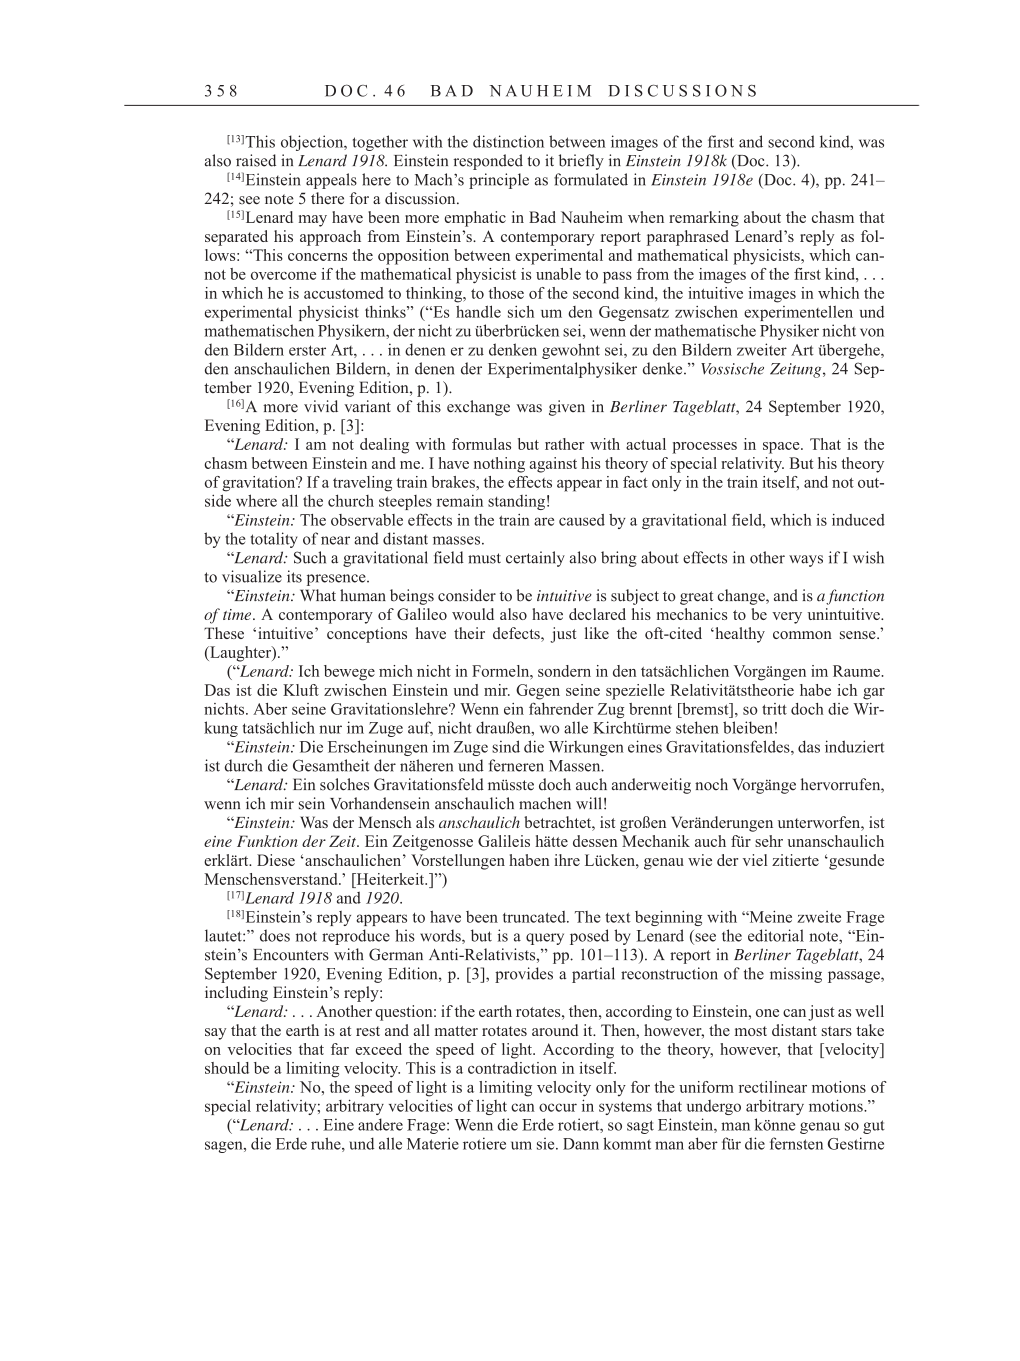 Volume 7: The Berlin Years: Writings, 1918-1921 page 358